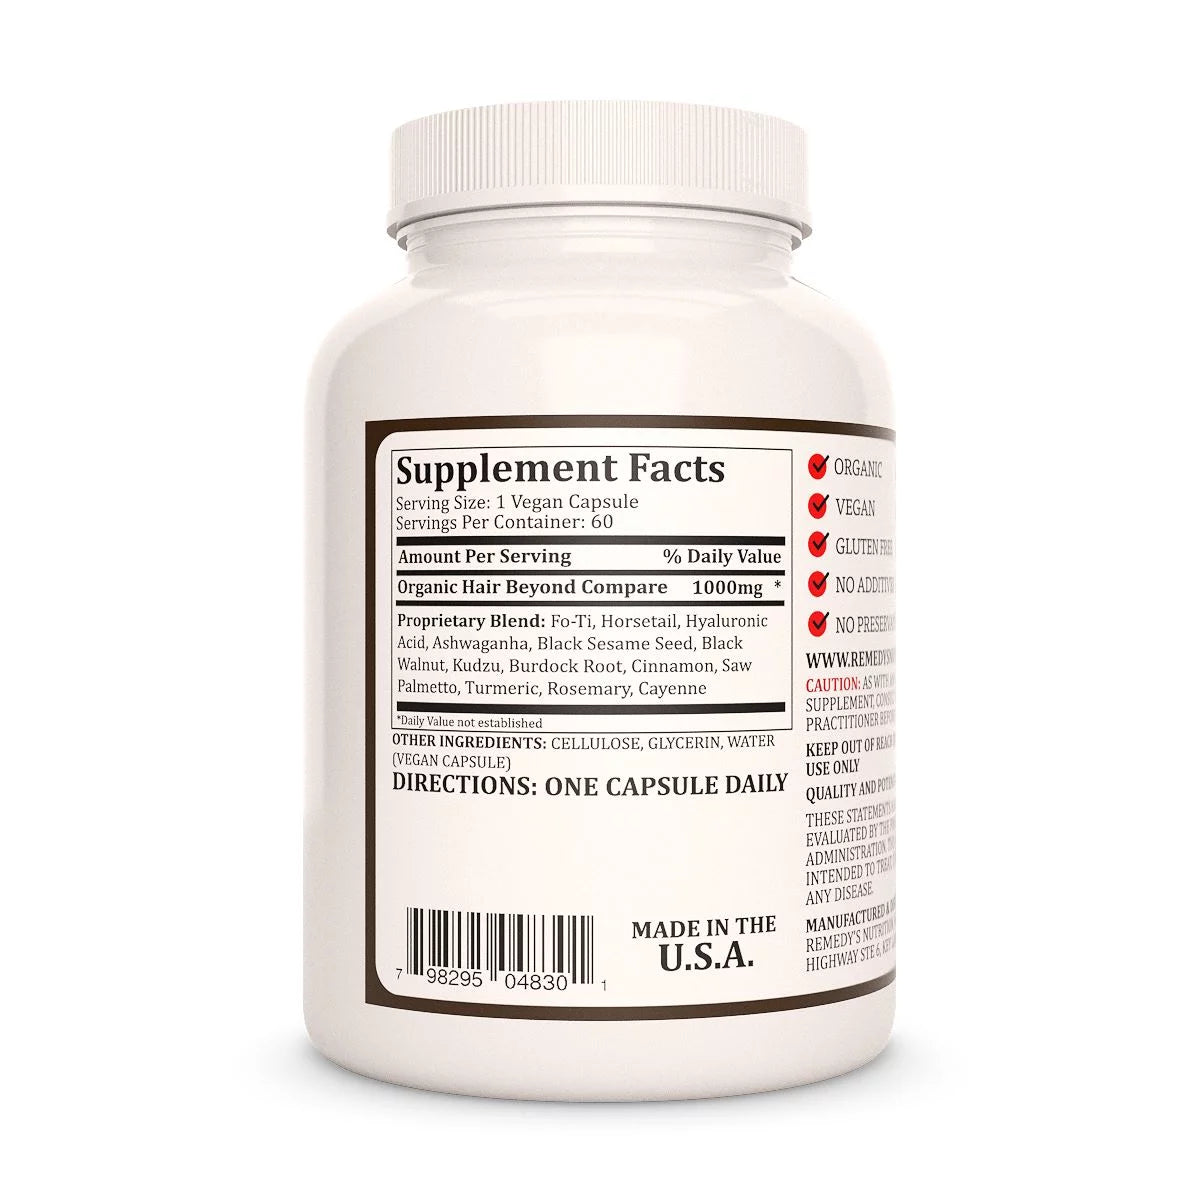 Image of Remedy's Nutrition® Hari Beyond Compare™ back label. Supplement Facts, Hyaluronic Acid, Ashwagandha, Black Sesame.